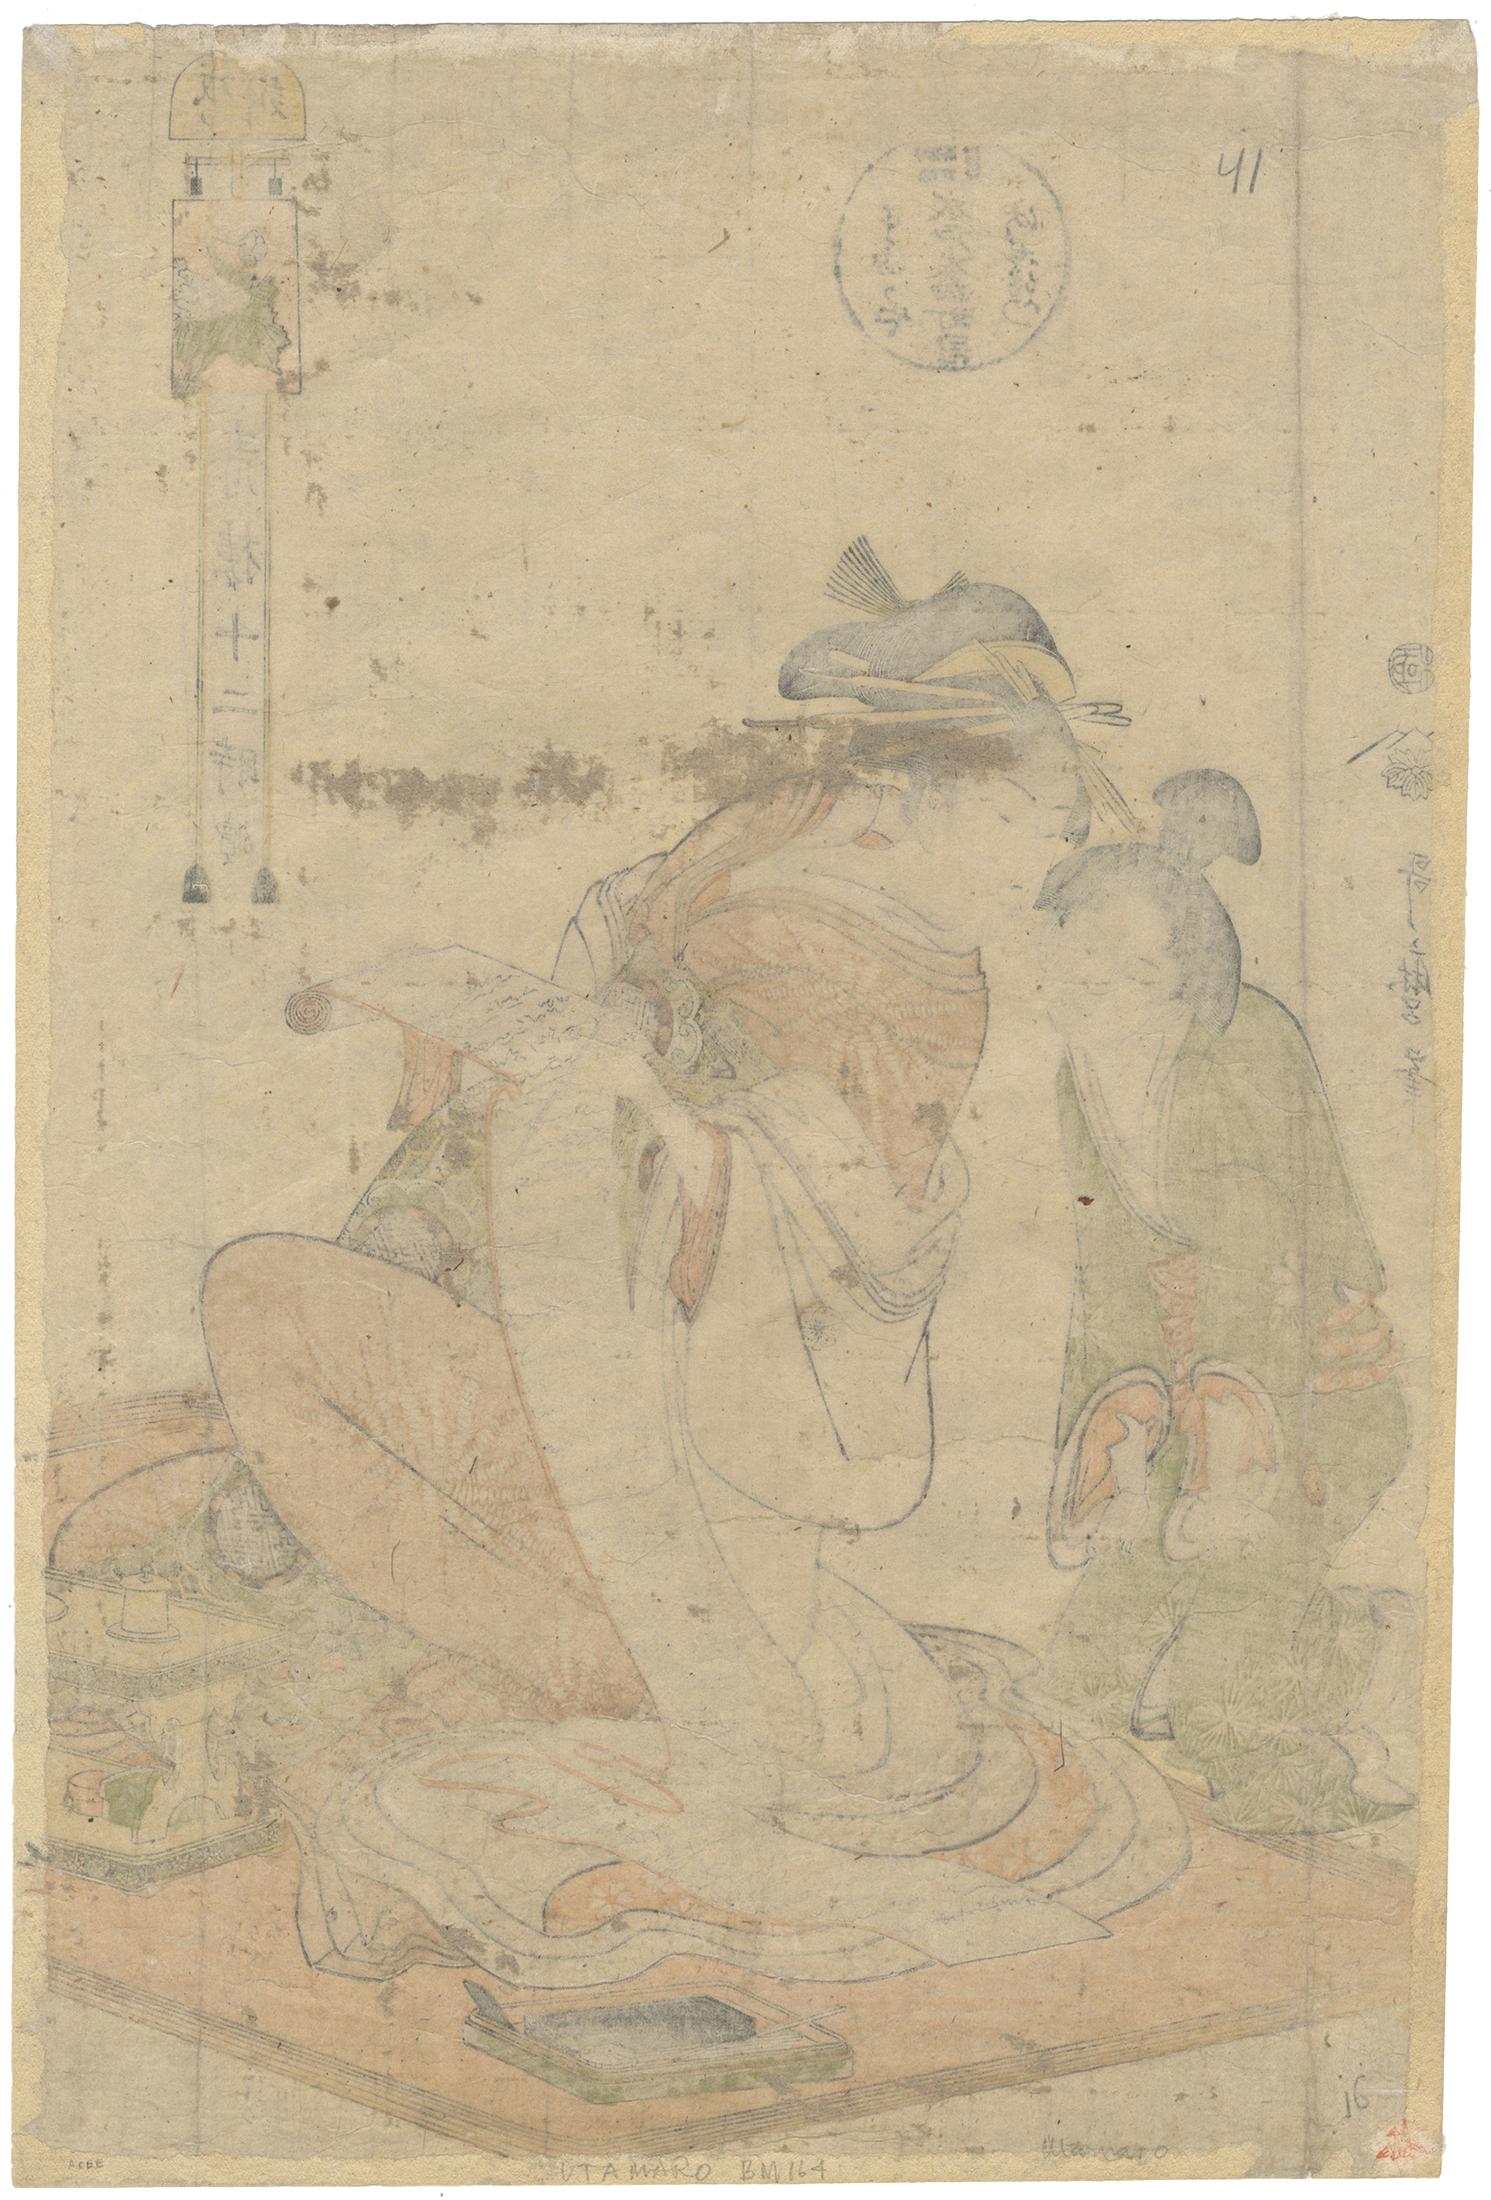 Artist: Utamaro Kitagawa (1753 - 1806)
Title: 7 to 9 pm
Series: Seiro Juni Toki (Twelve Hours of the Green House)
Publisher: Tsutaya Juzaboro
Date: 1789
Dimensions: 24.3 x 35.9 cm.

The Yoshiwara district, which Utamaro often frequented, was